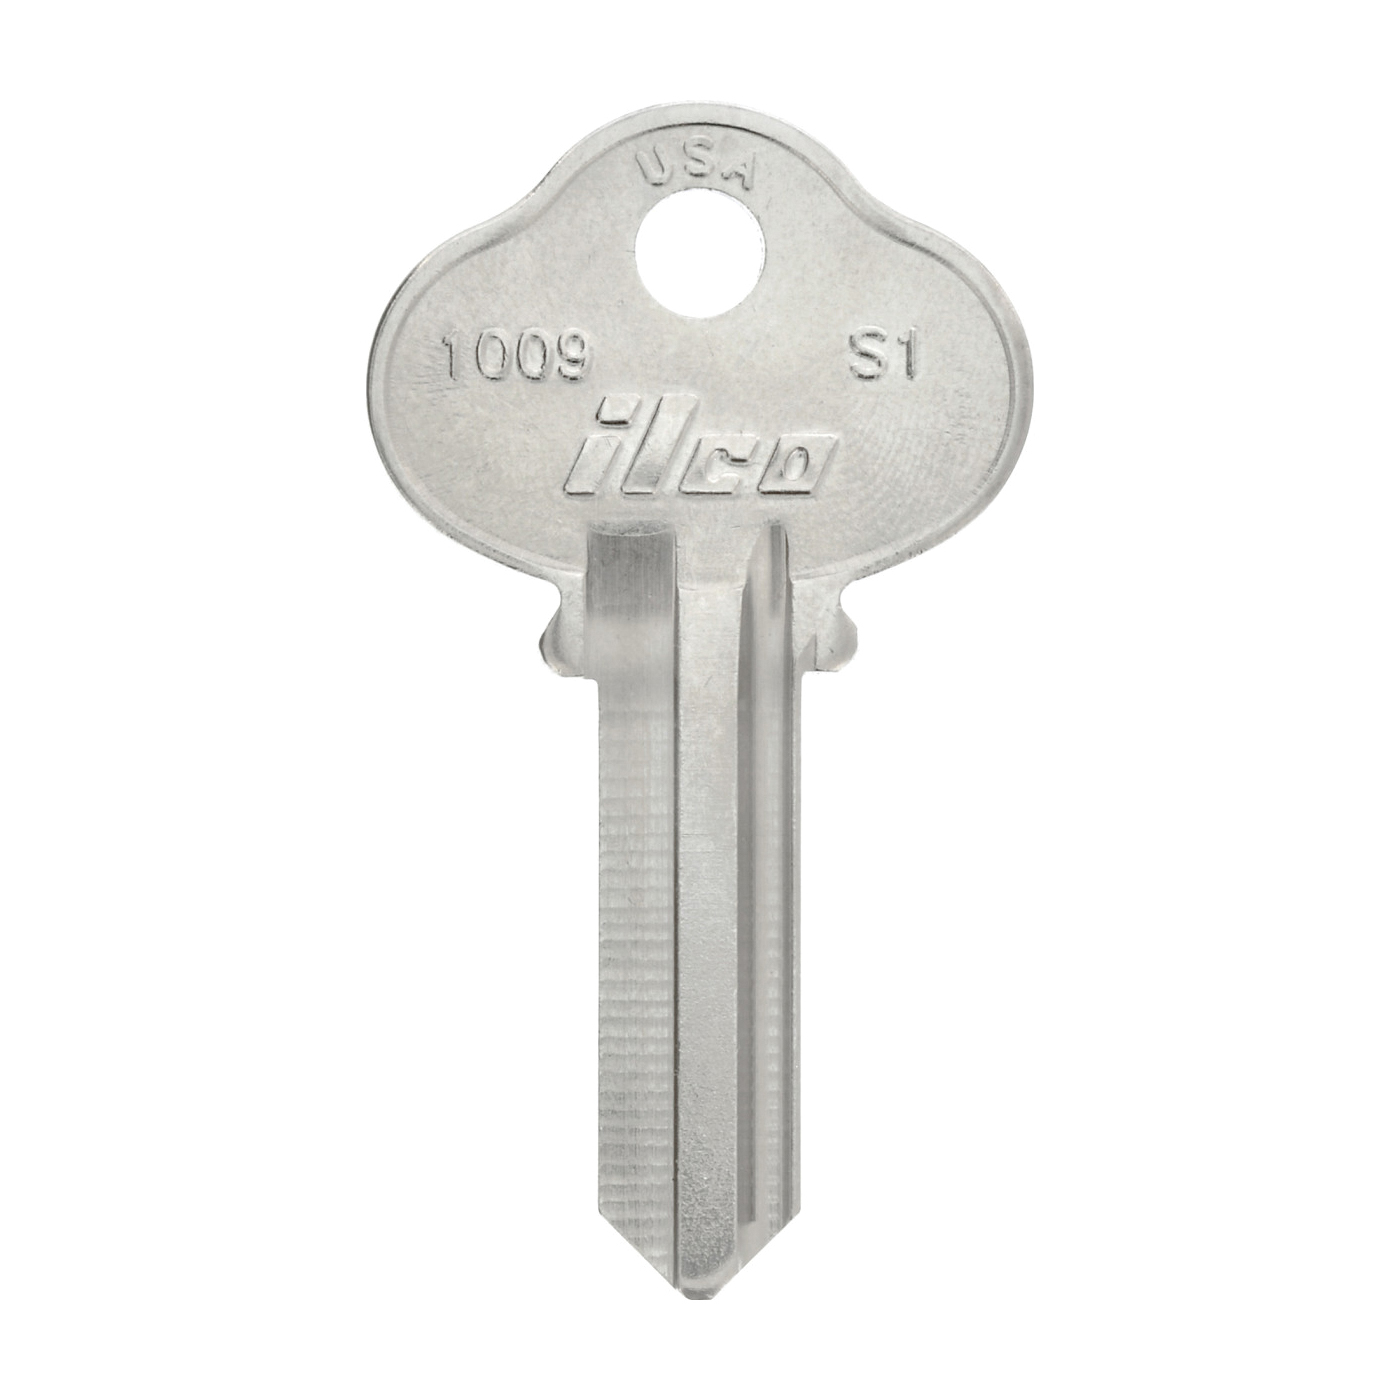 Hillman 441700 Key, For: Sargent Locks